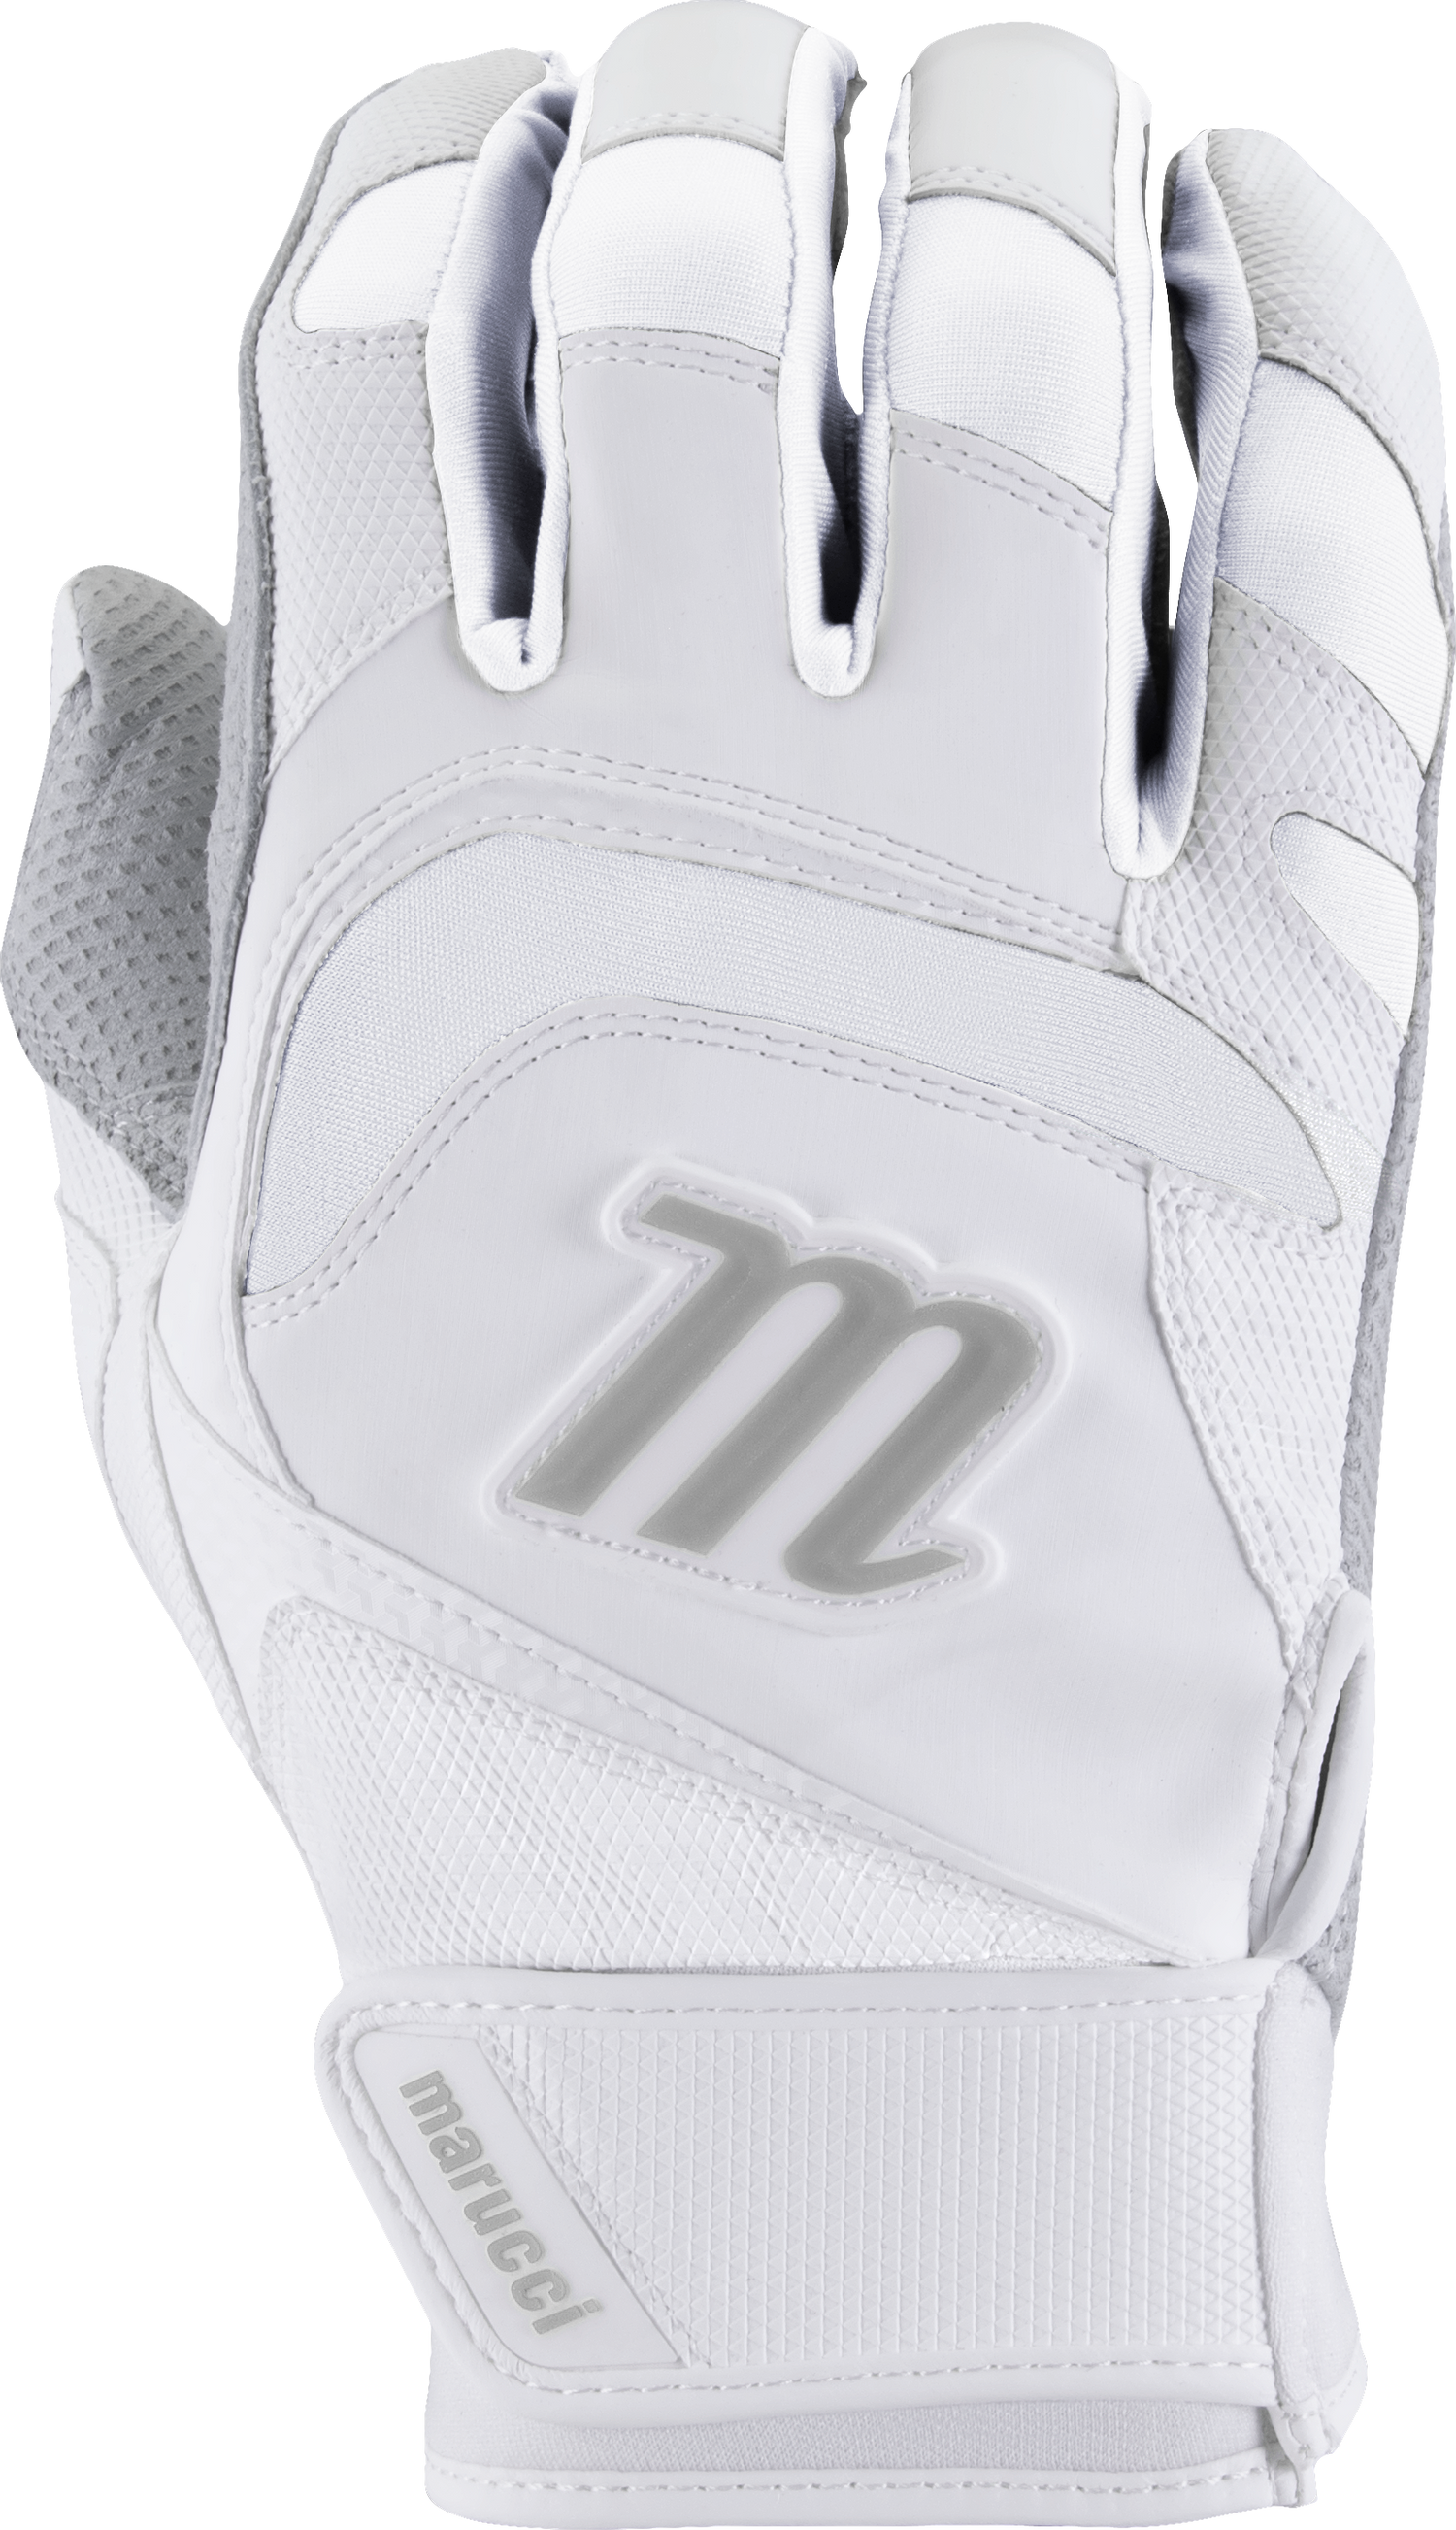 Youth Signature Batting Gloves V4 - White